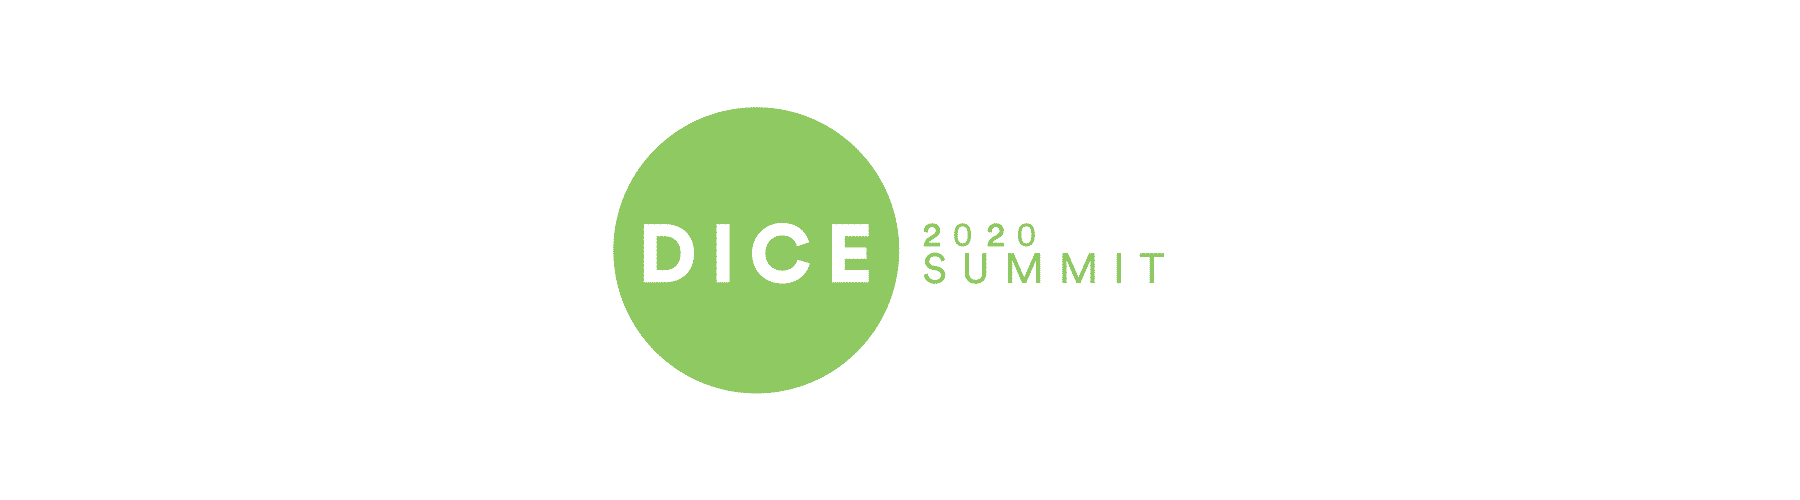 DENNIS COOPER 在2020年D.I.C.E.峰会上主持关于游戏和气候变化的圆桌会议